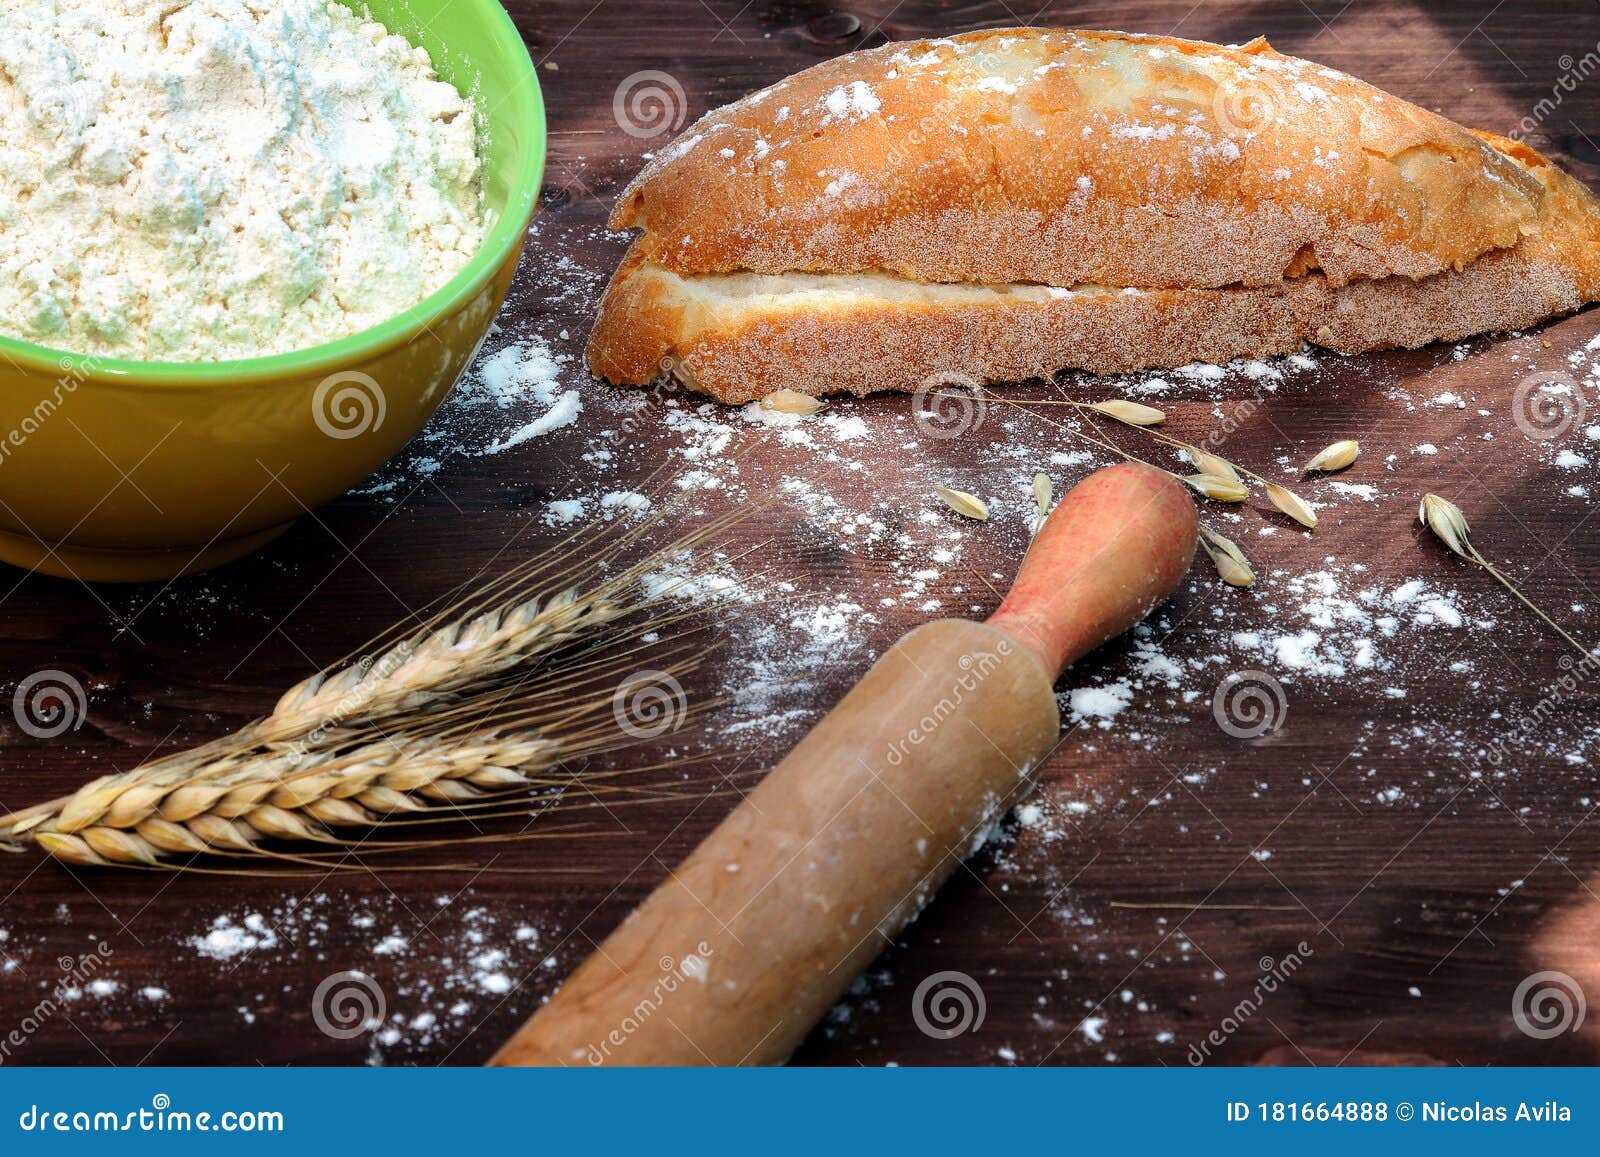 homemade artisan bread ii